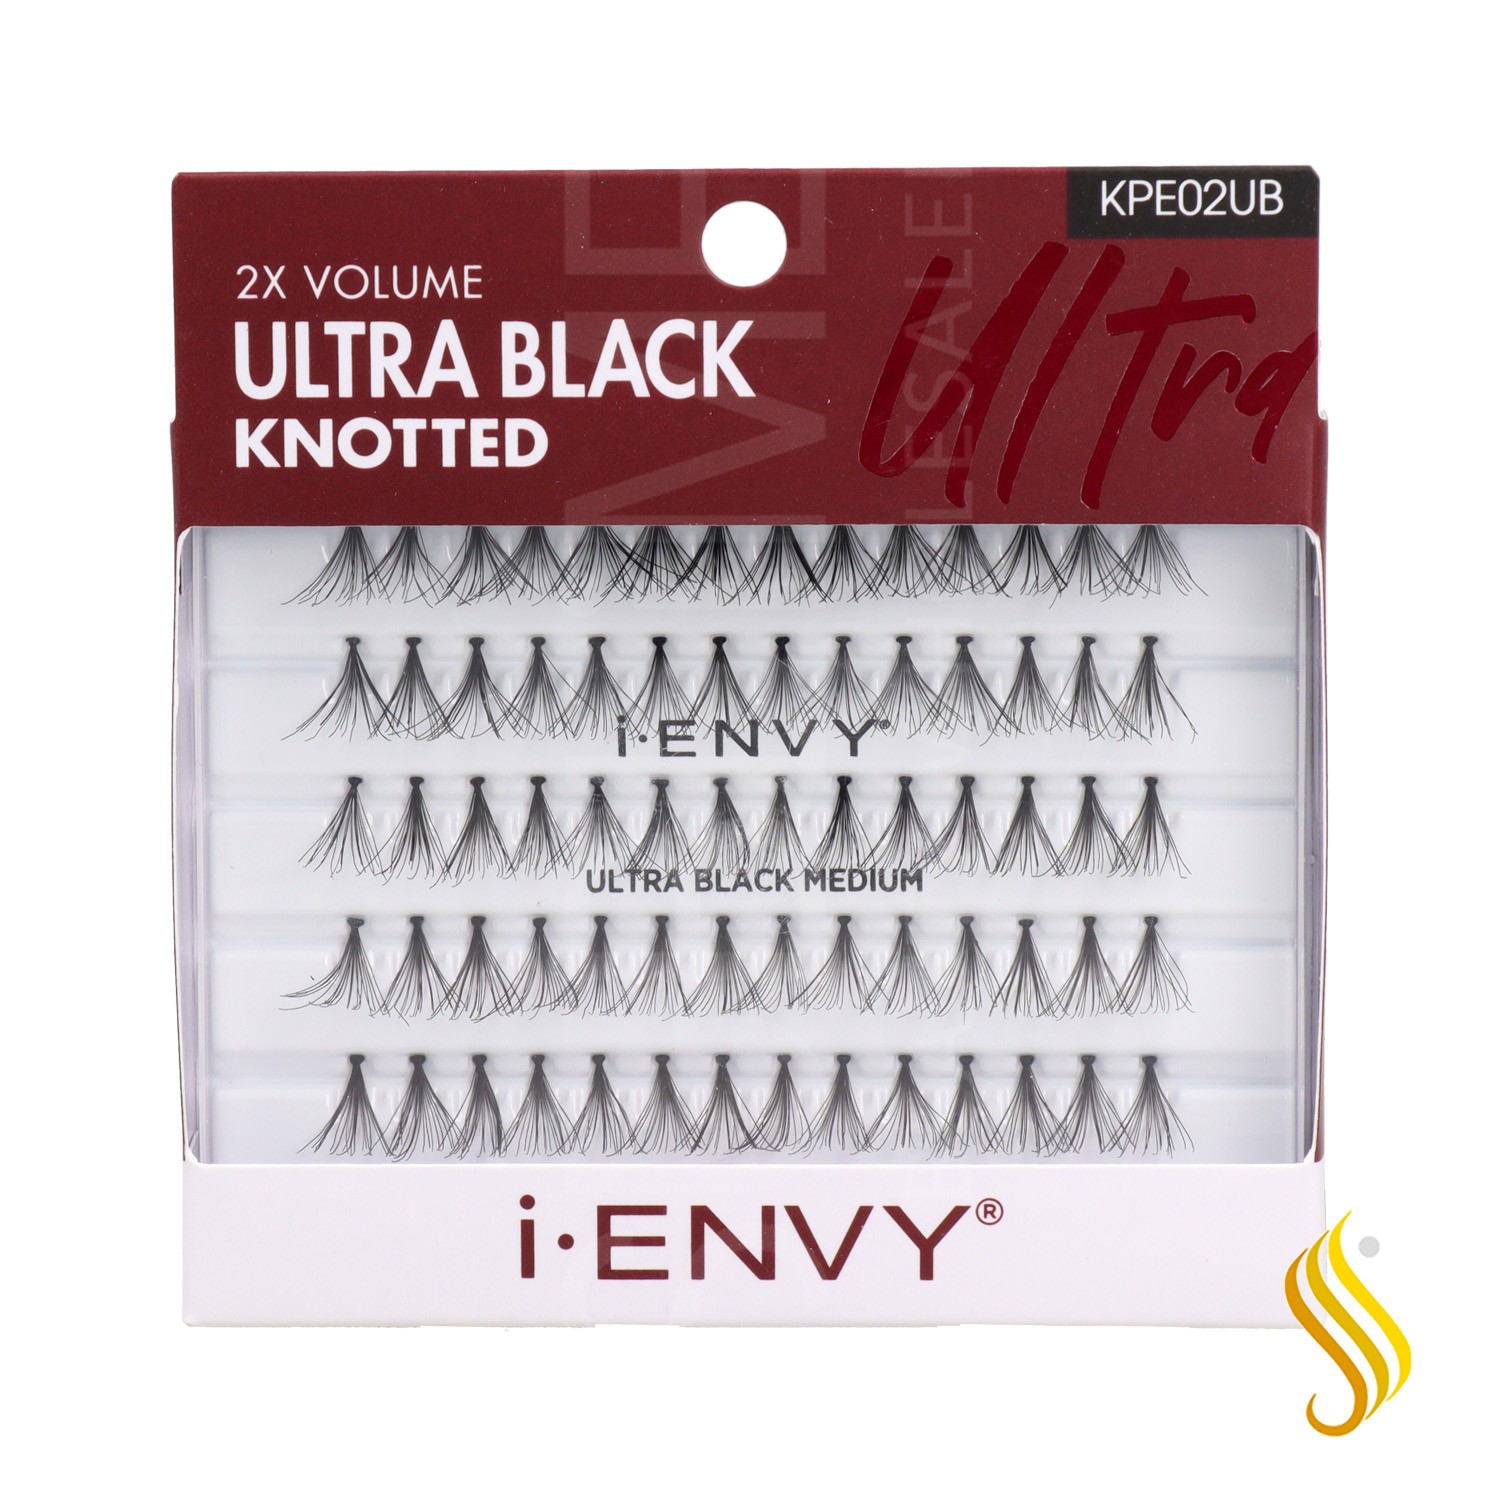 I Envy Ultra Black Knotted 2X Volume